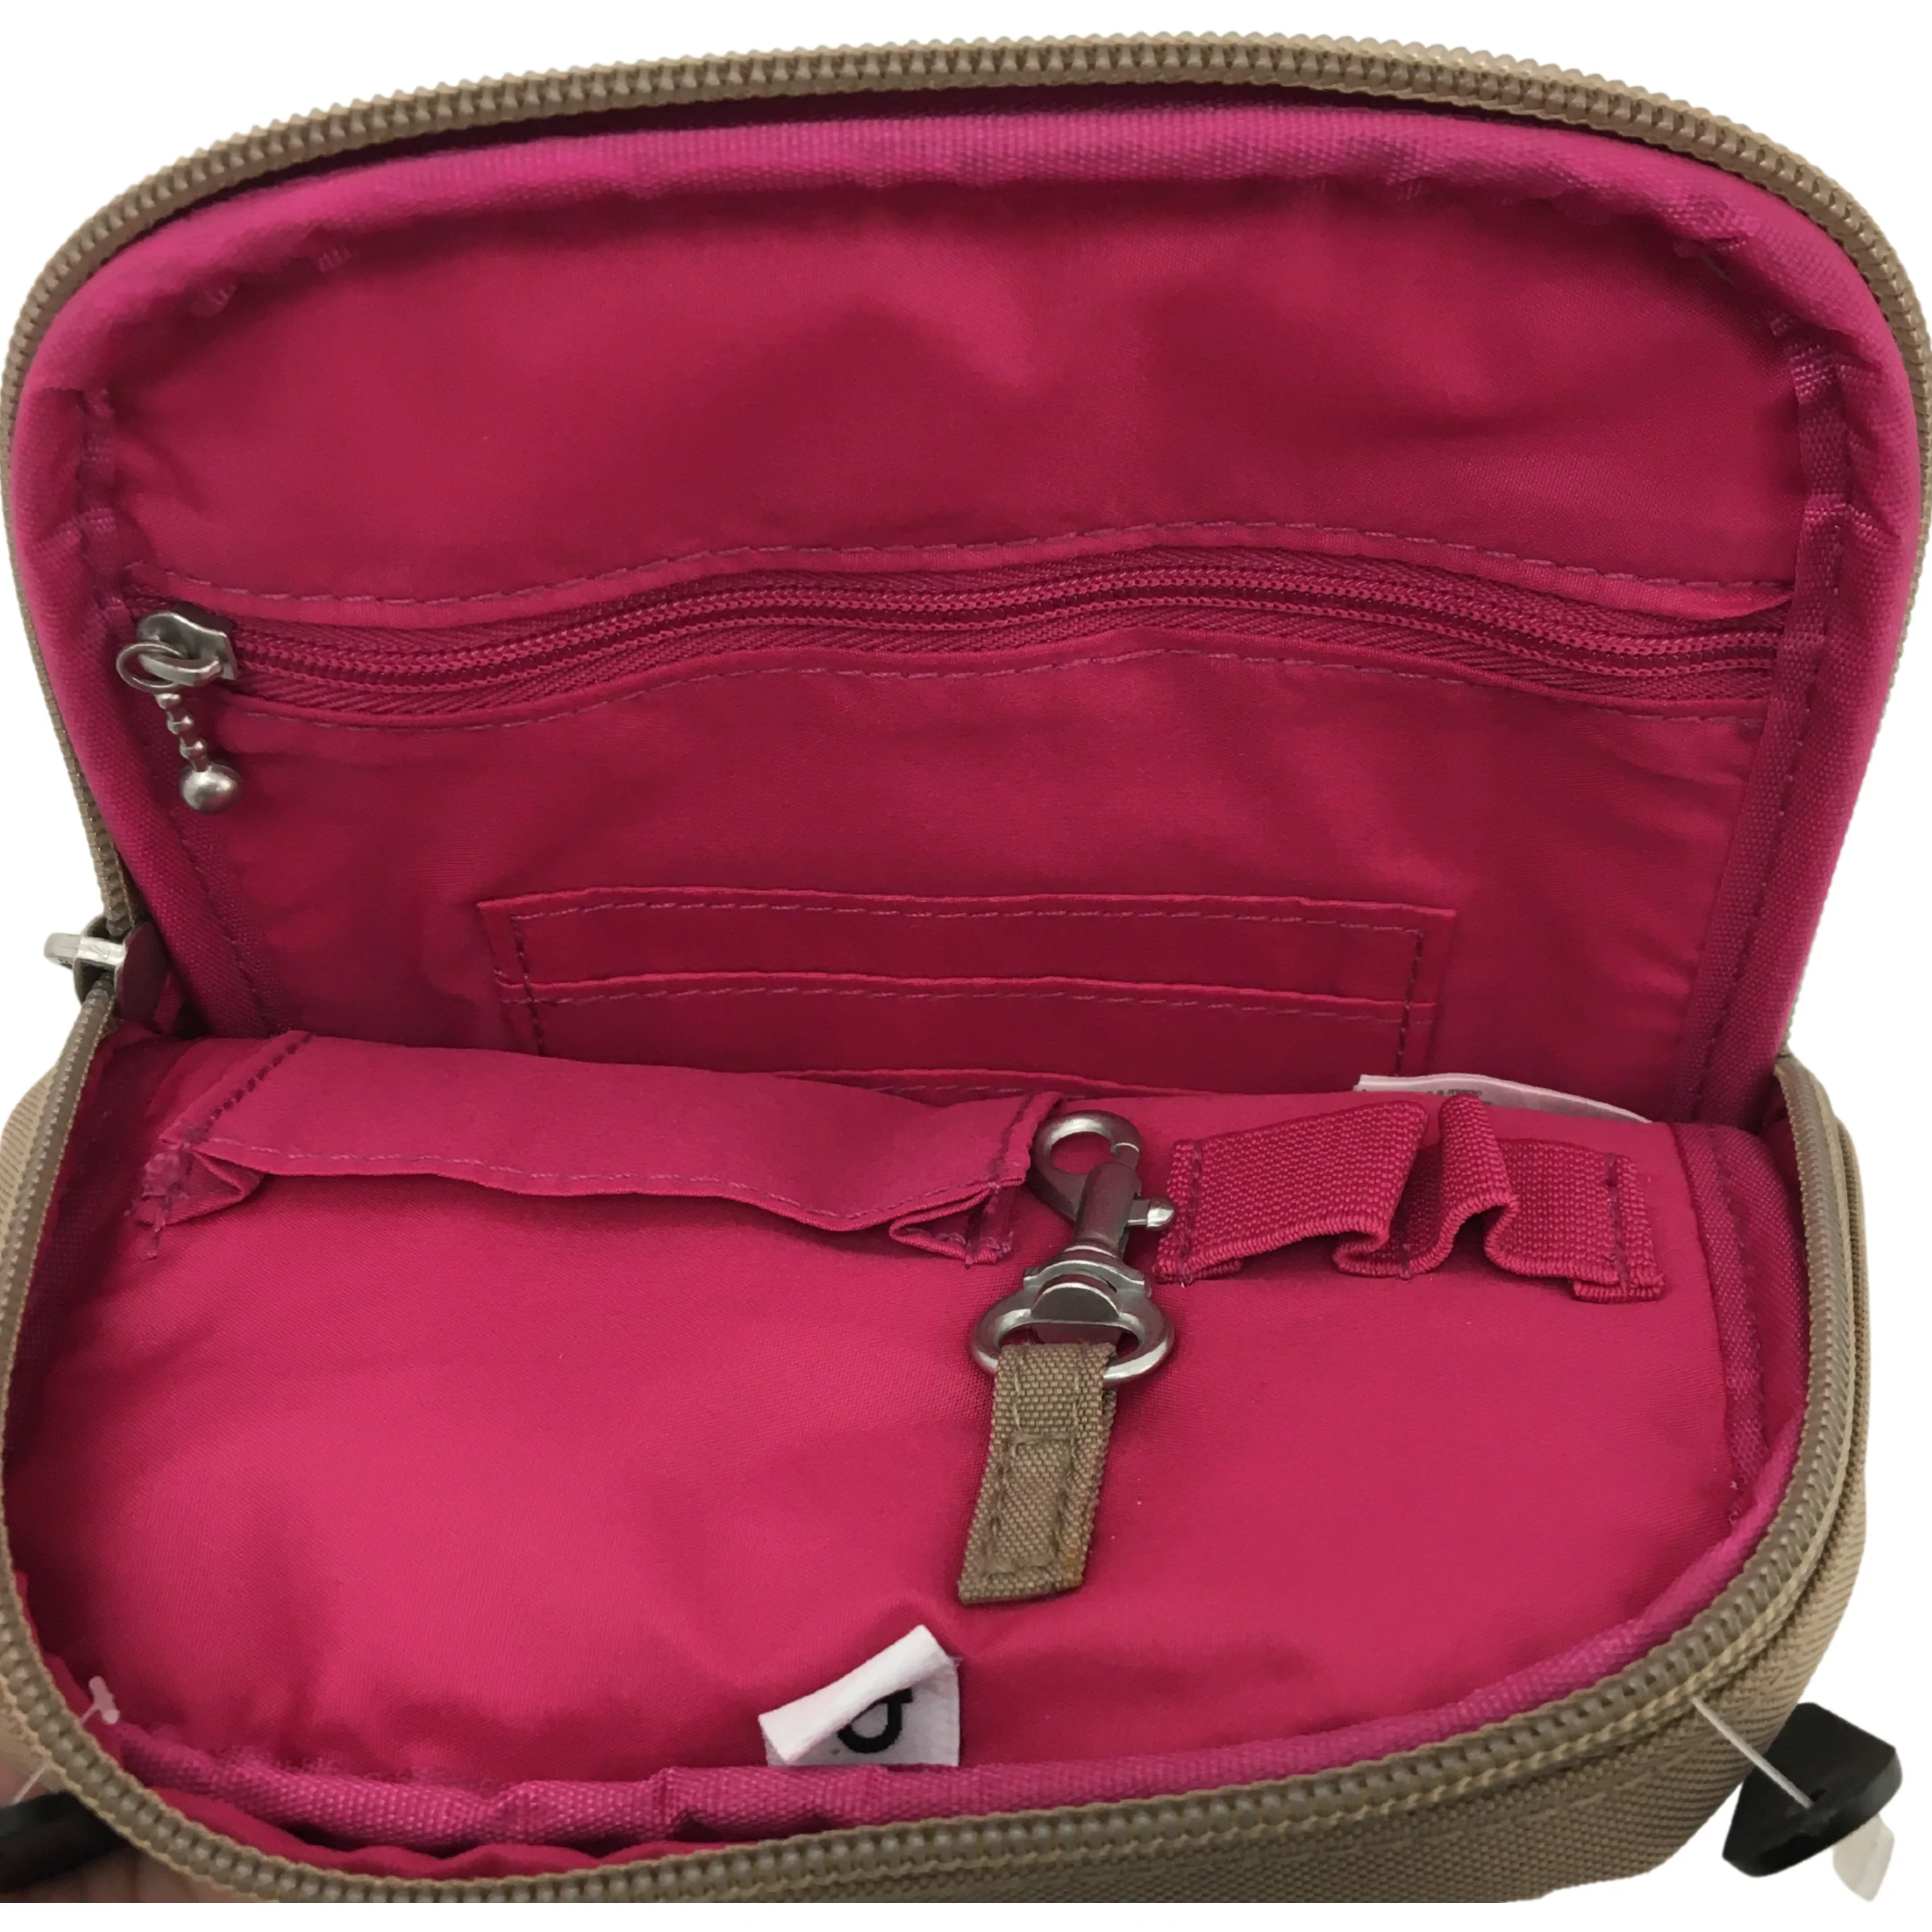 Baggallini Journey Crossbody Bag / Travel Bag / Khaki / RFID Protected / Travel Accessories